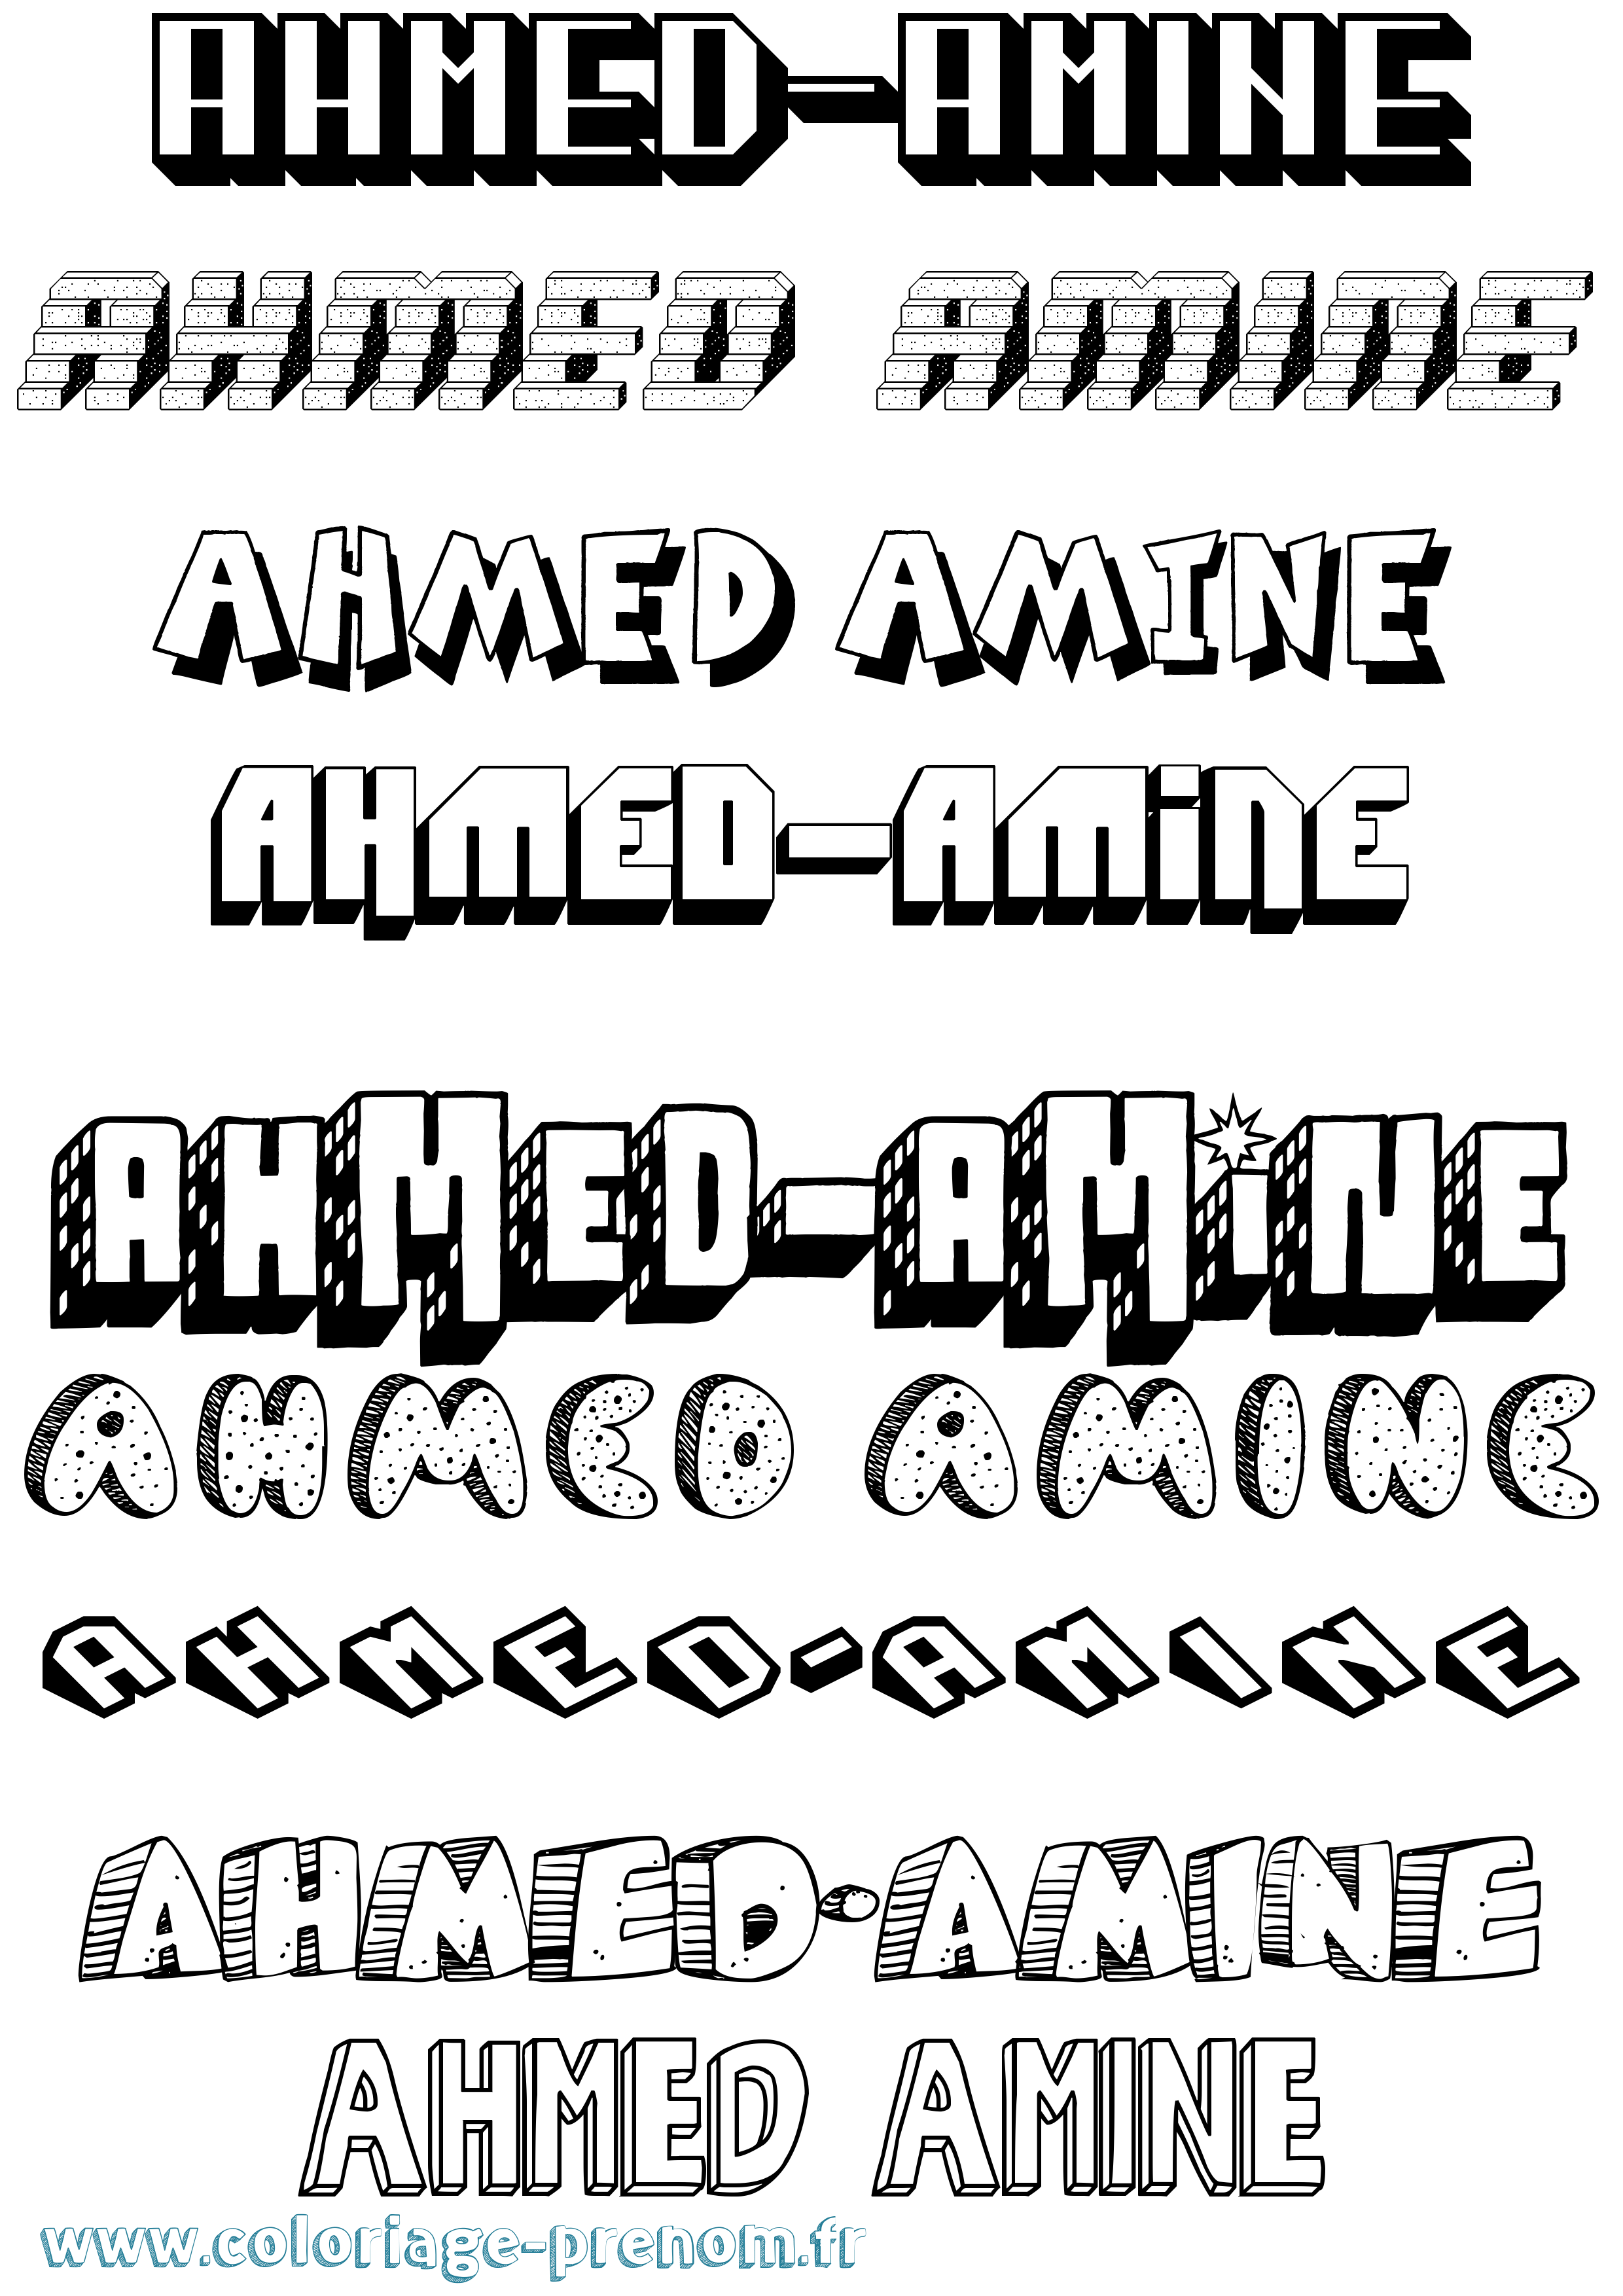 Coloriage prénom Ahmed-Amine Effet 3D